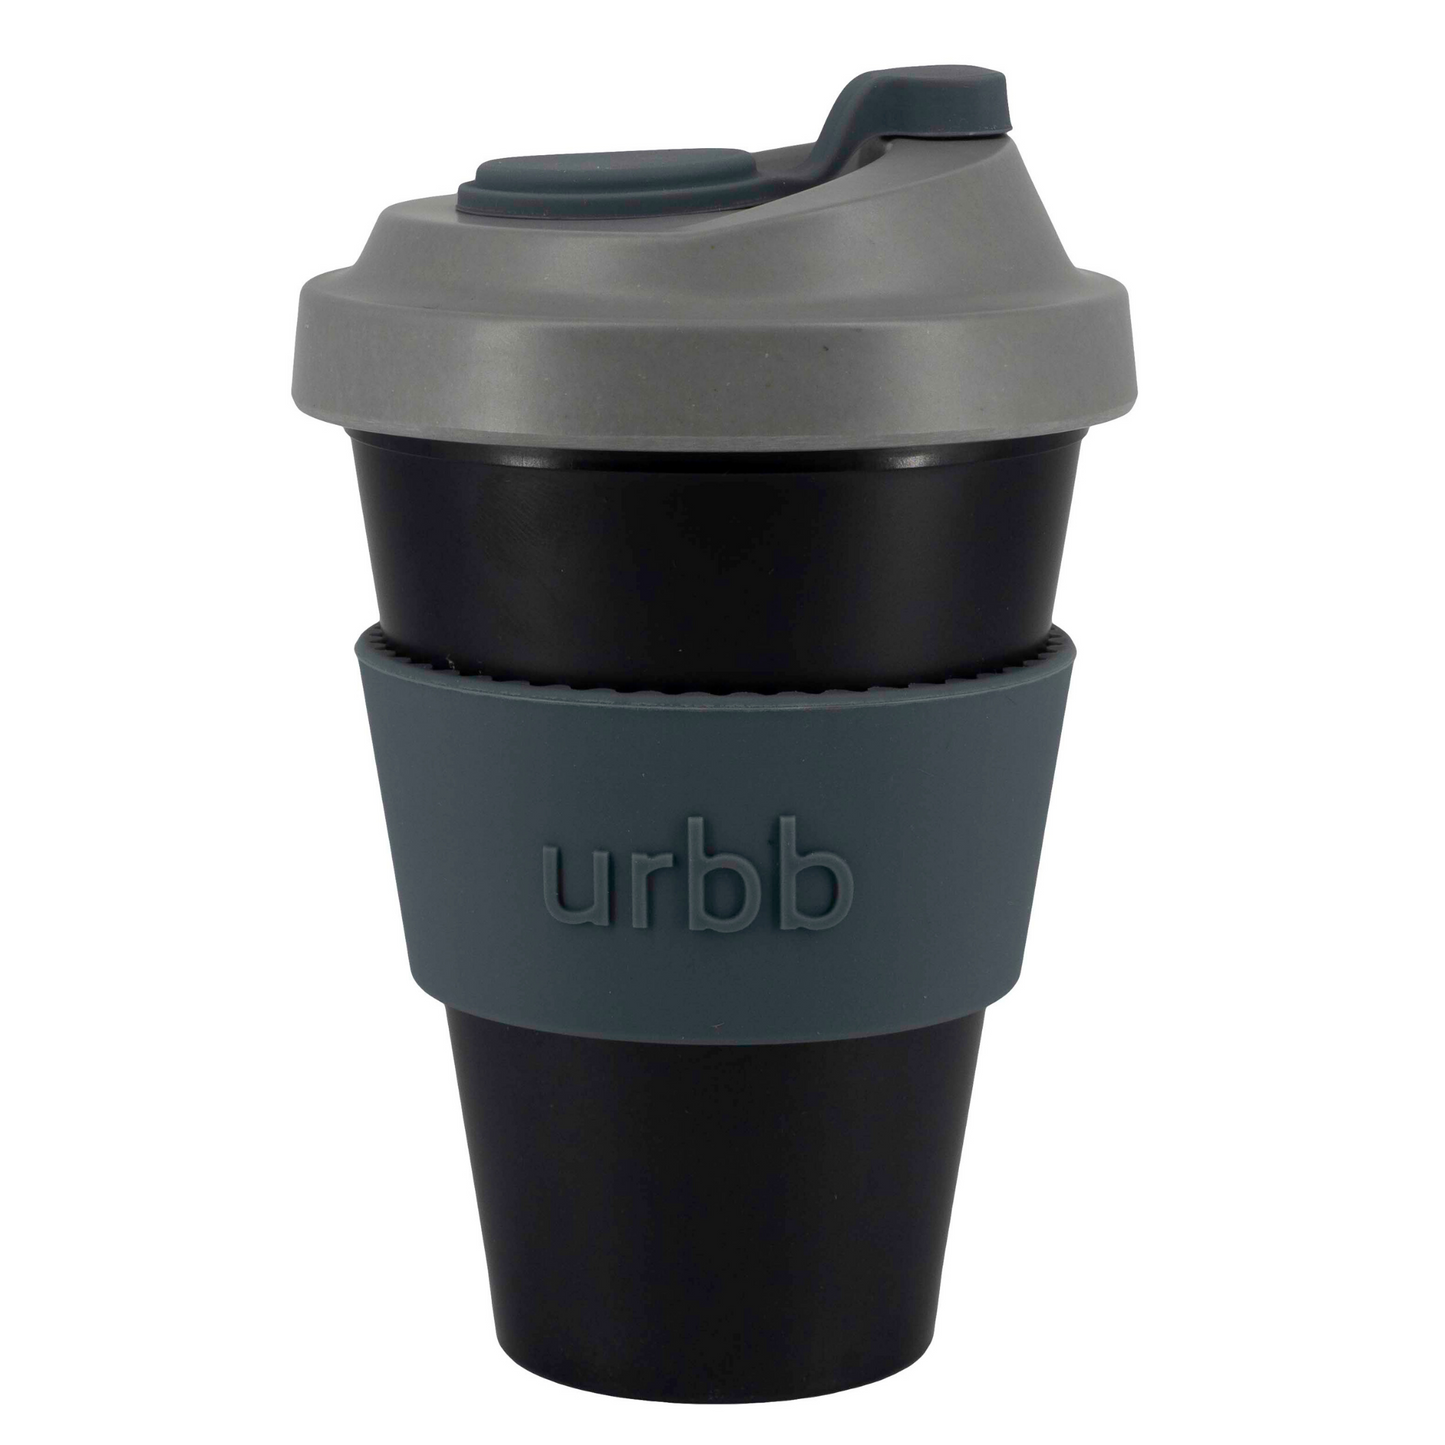 PORTER GREEN - Reusable Coffee Urbb Cup | Berlin